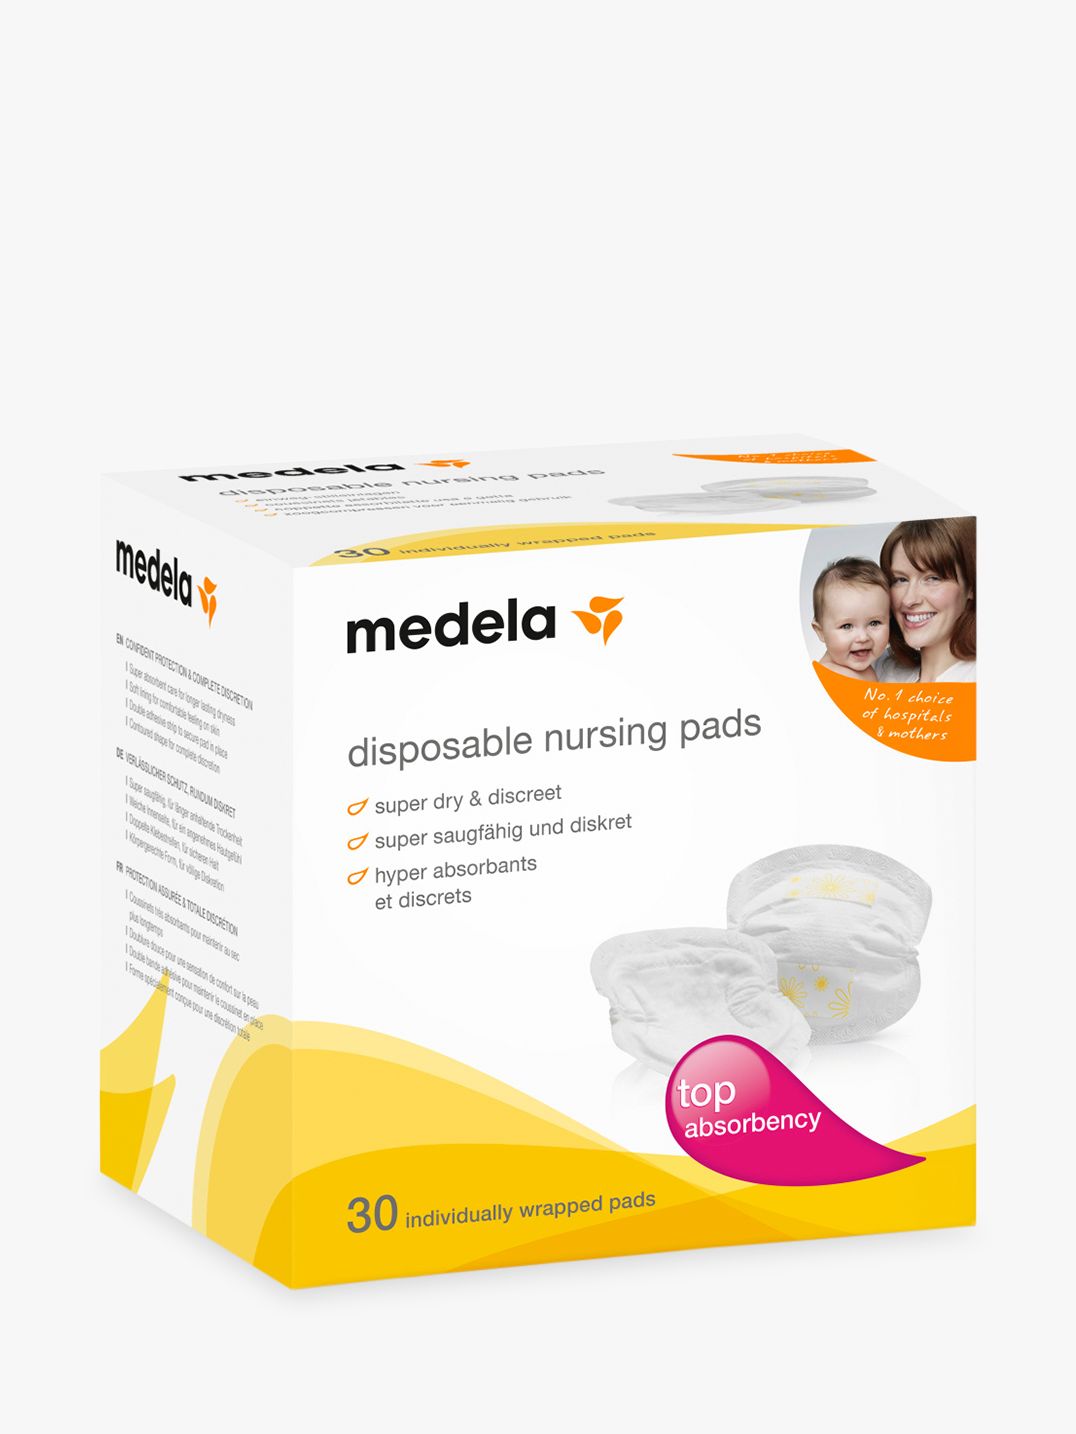 Medela Disposable Nursing Breast Pads - Pack of 60 pads